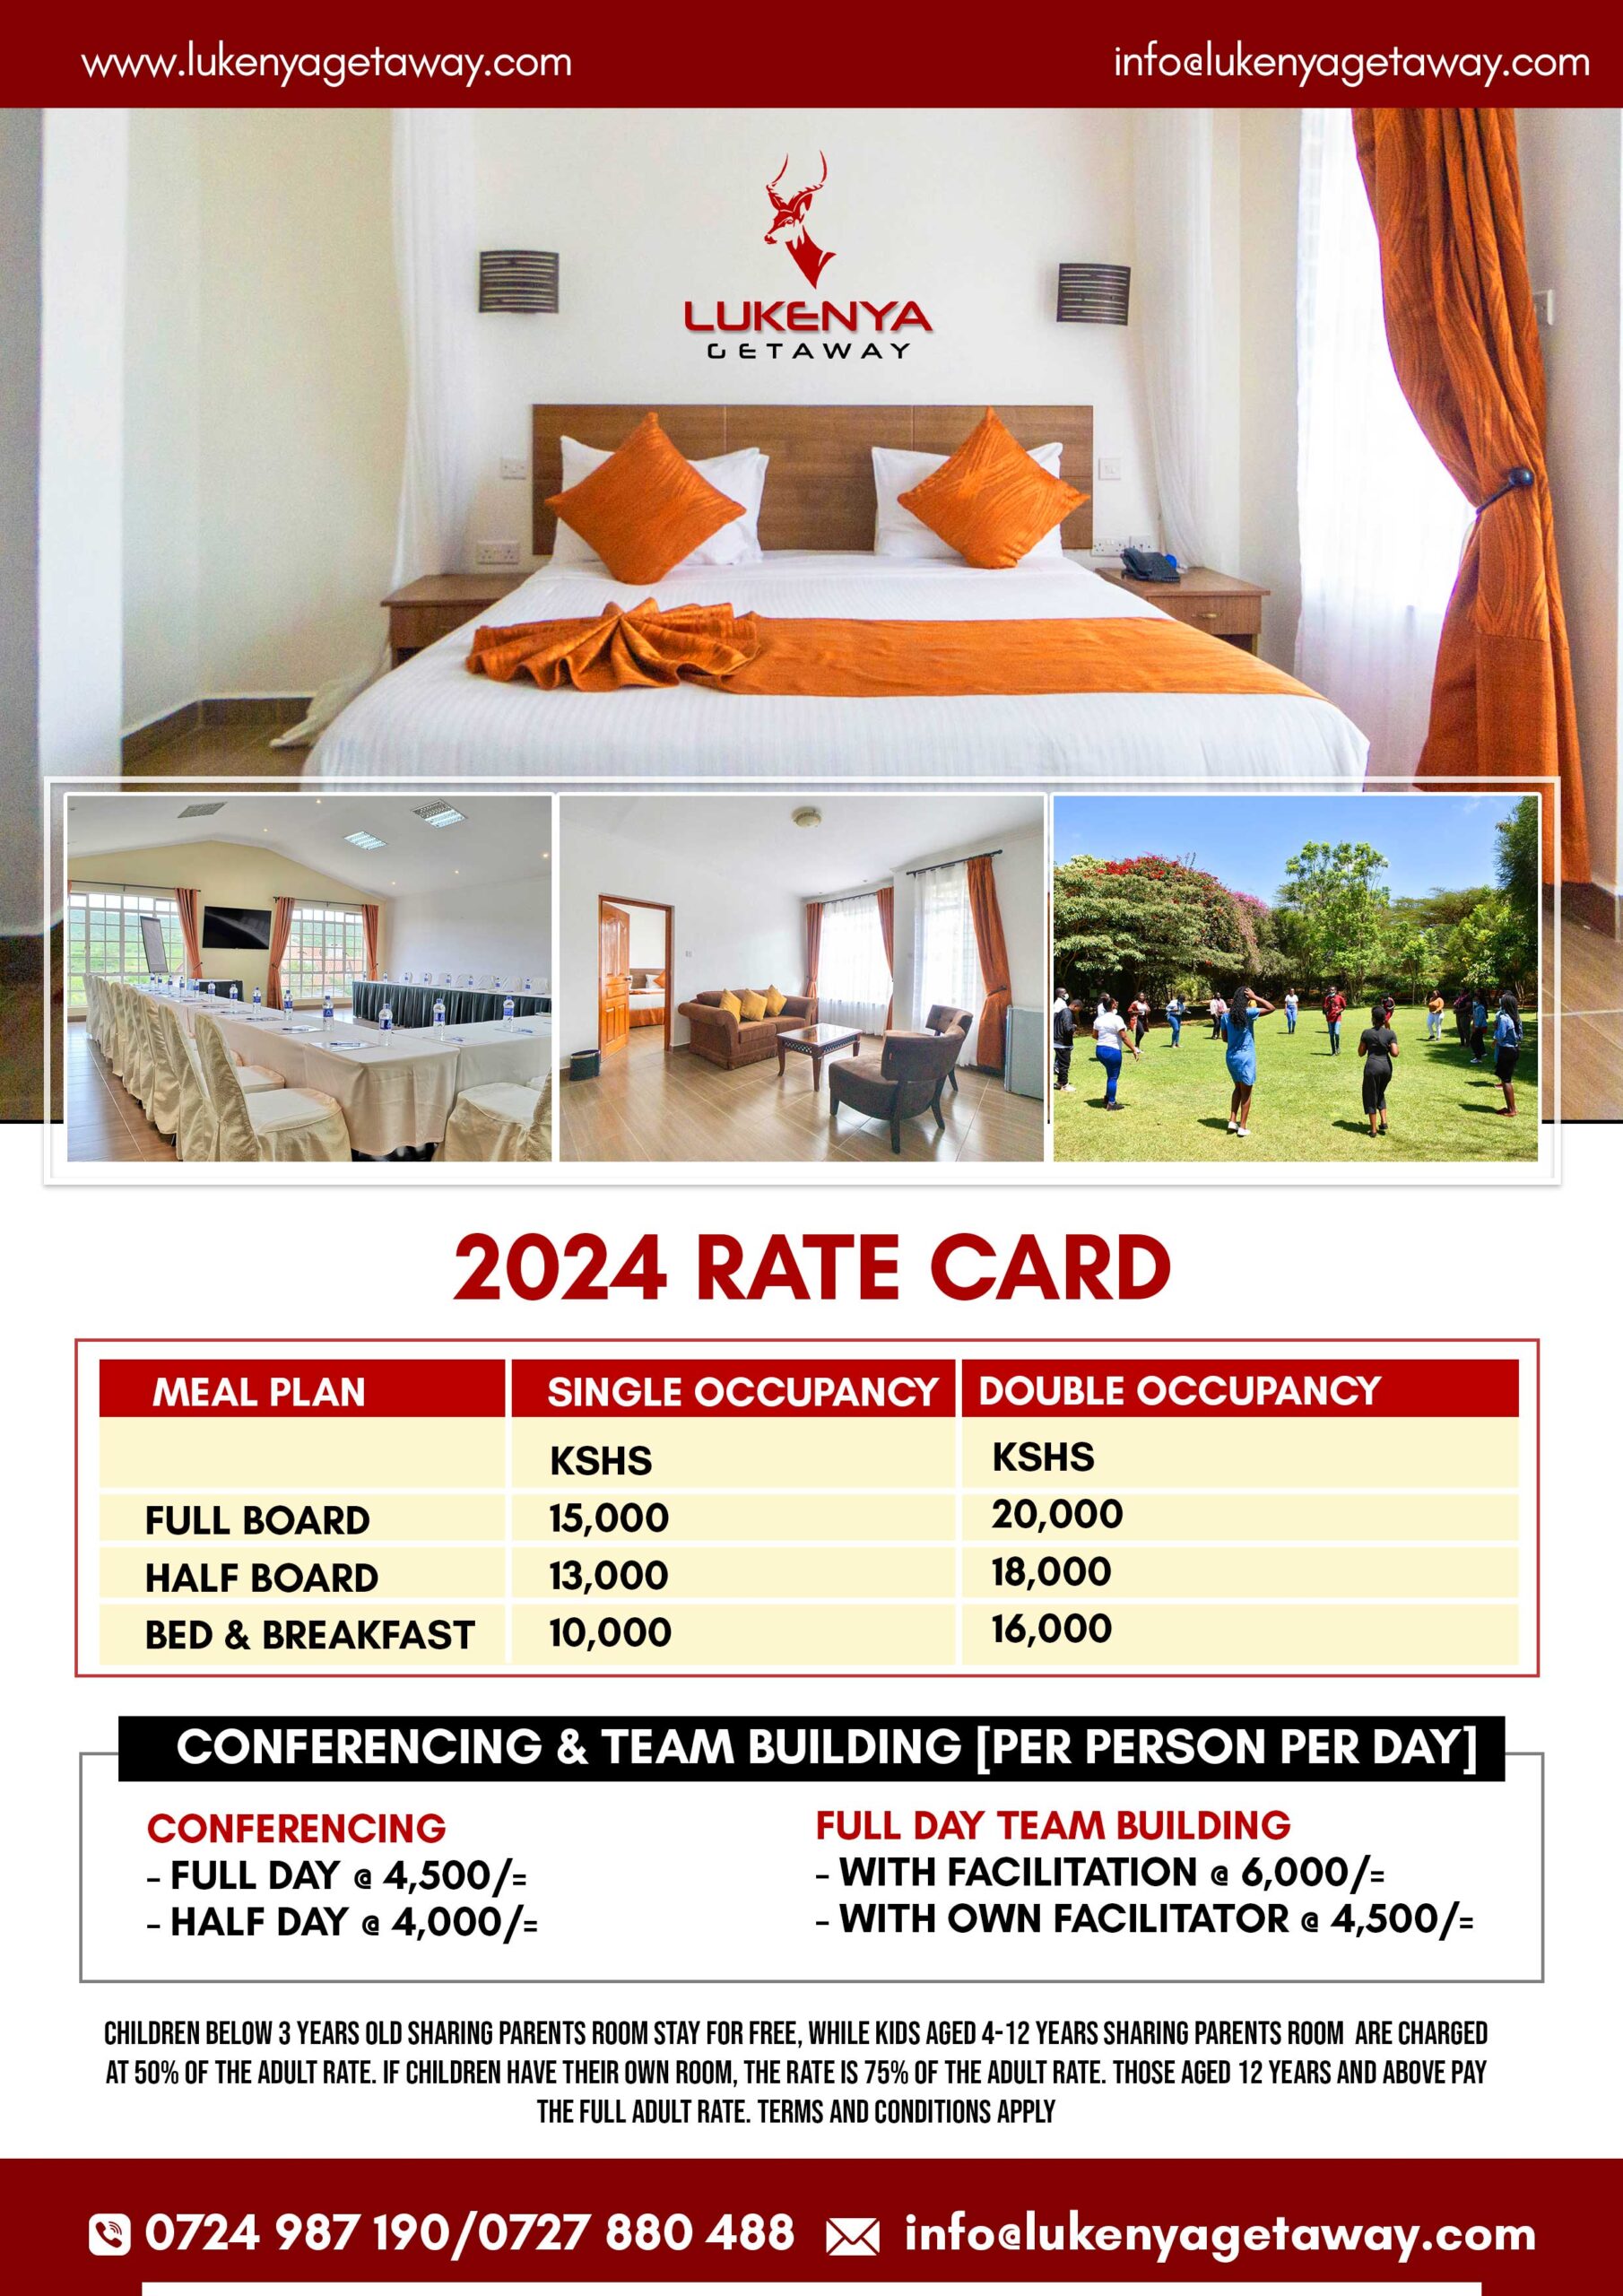 Lukenya getaway accommodation rate card 2024